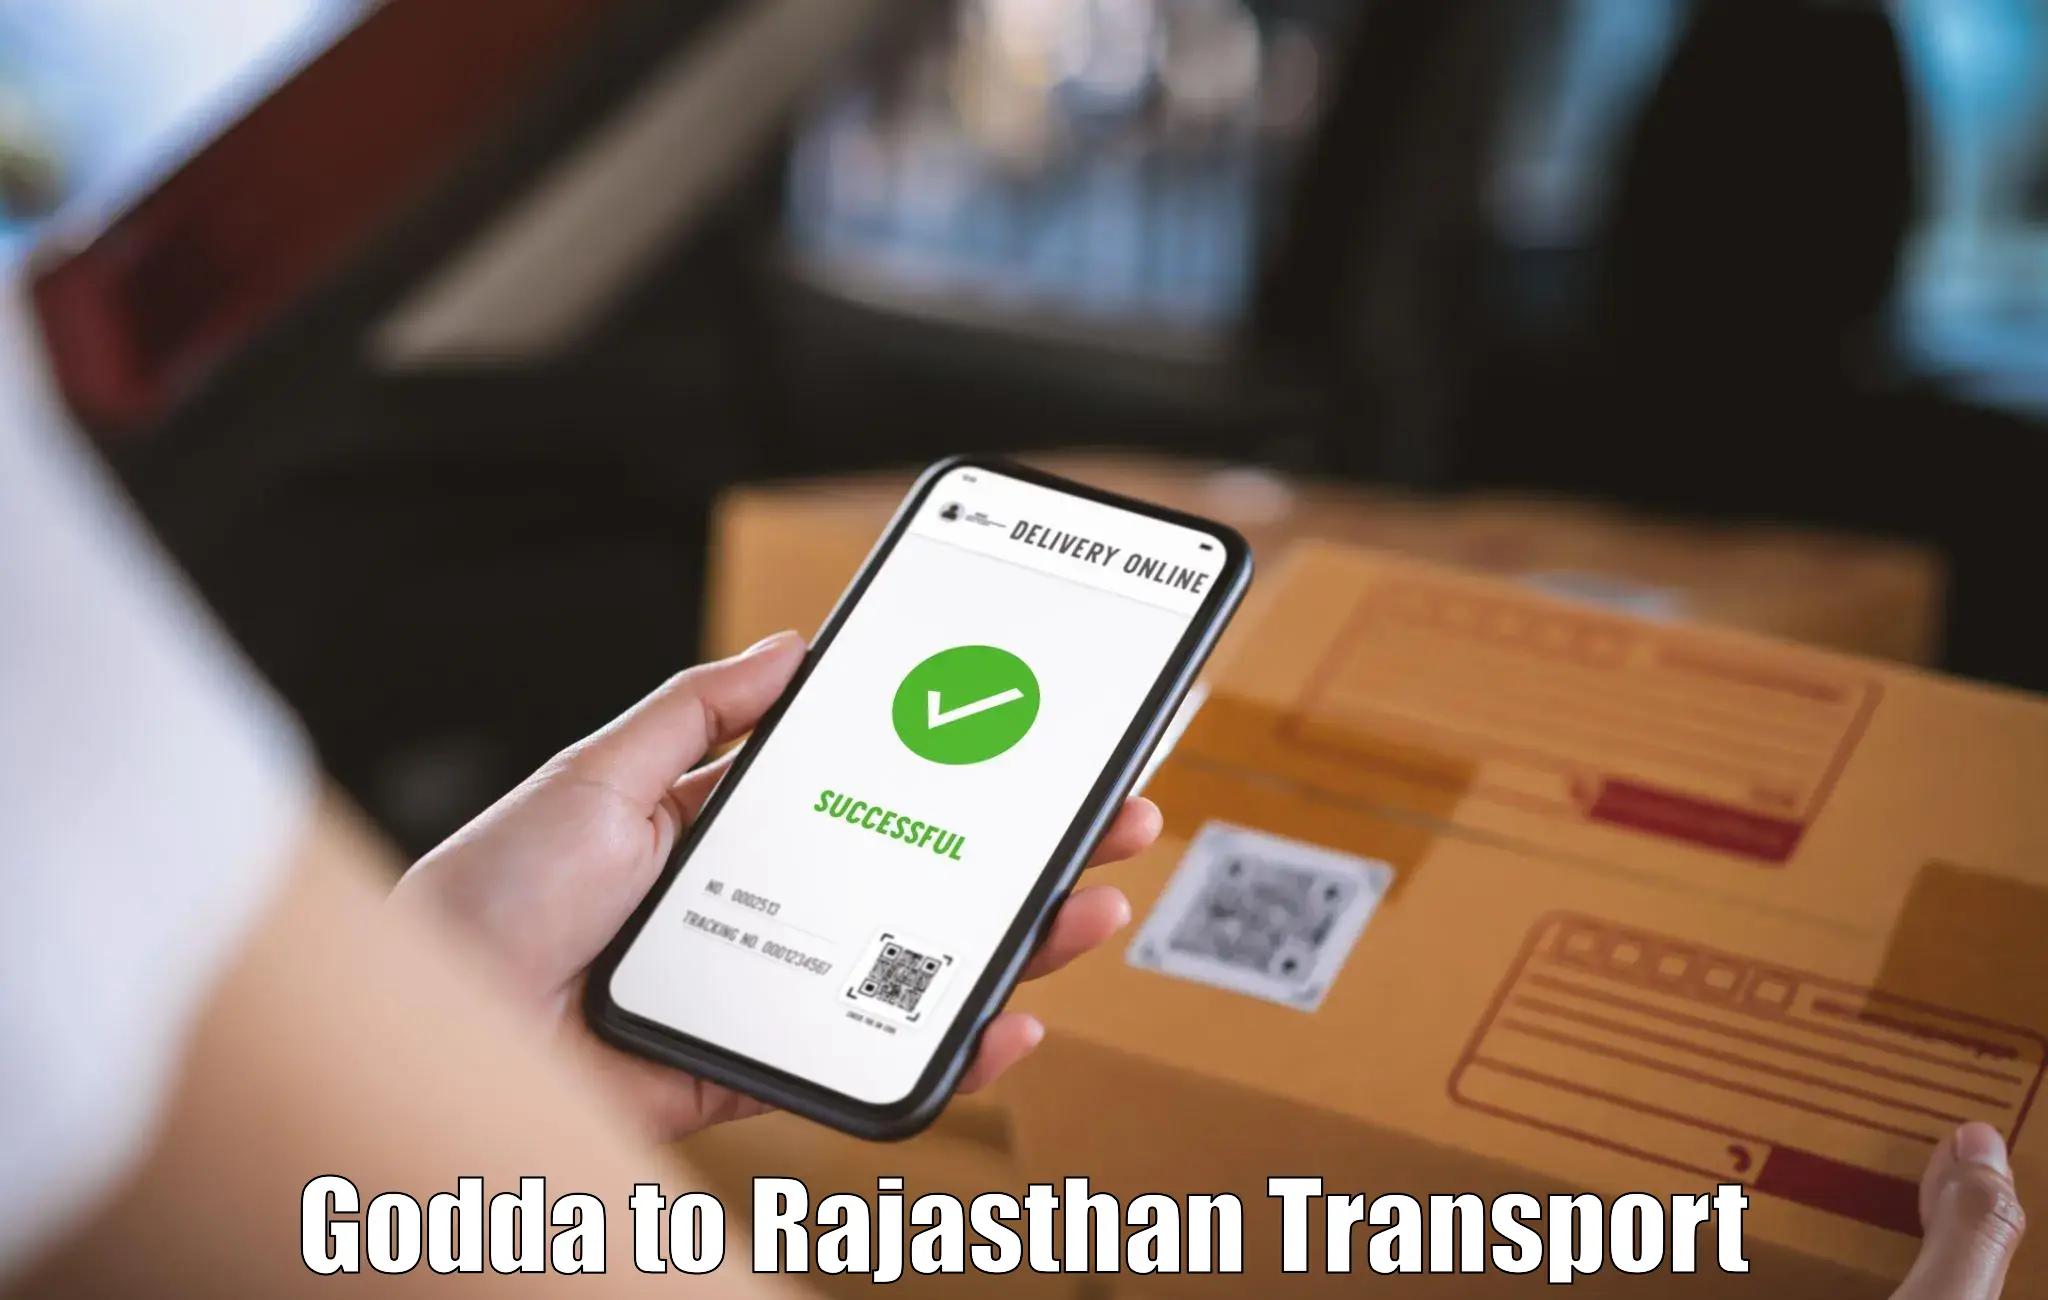 Transport in sharing Godda to Asind